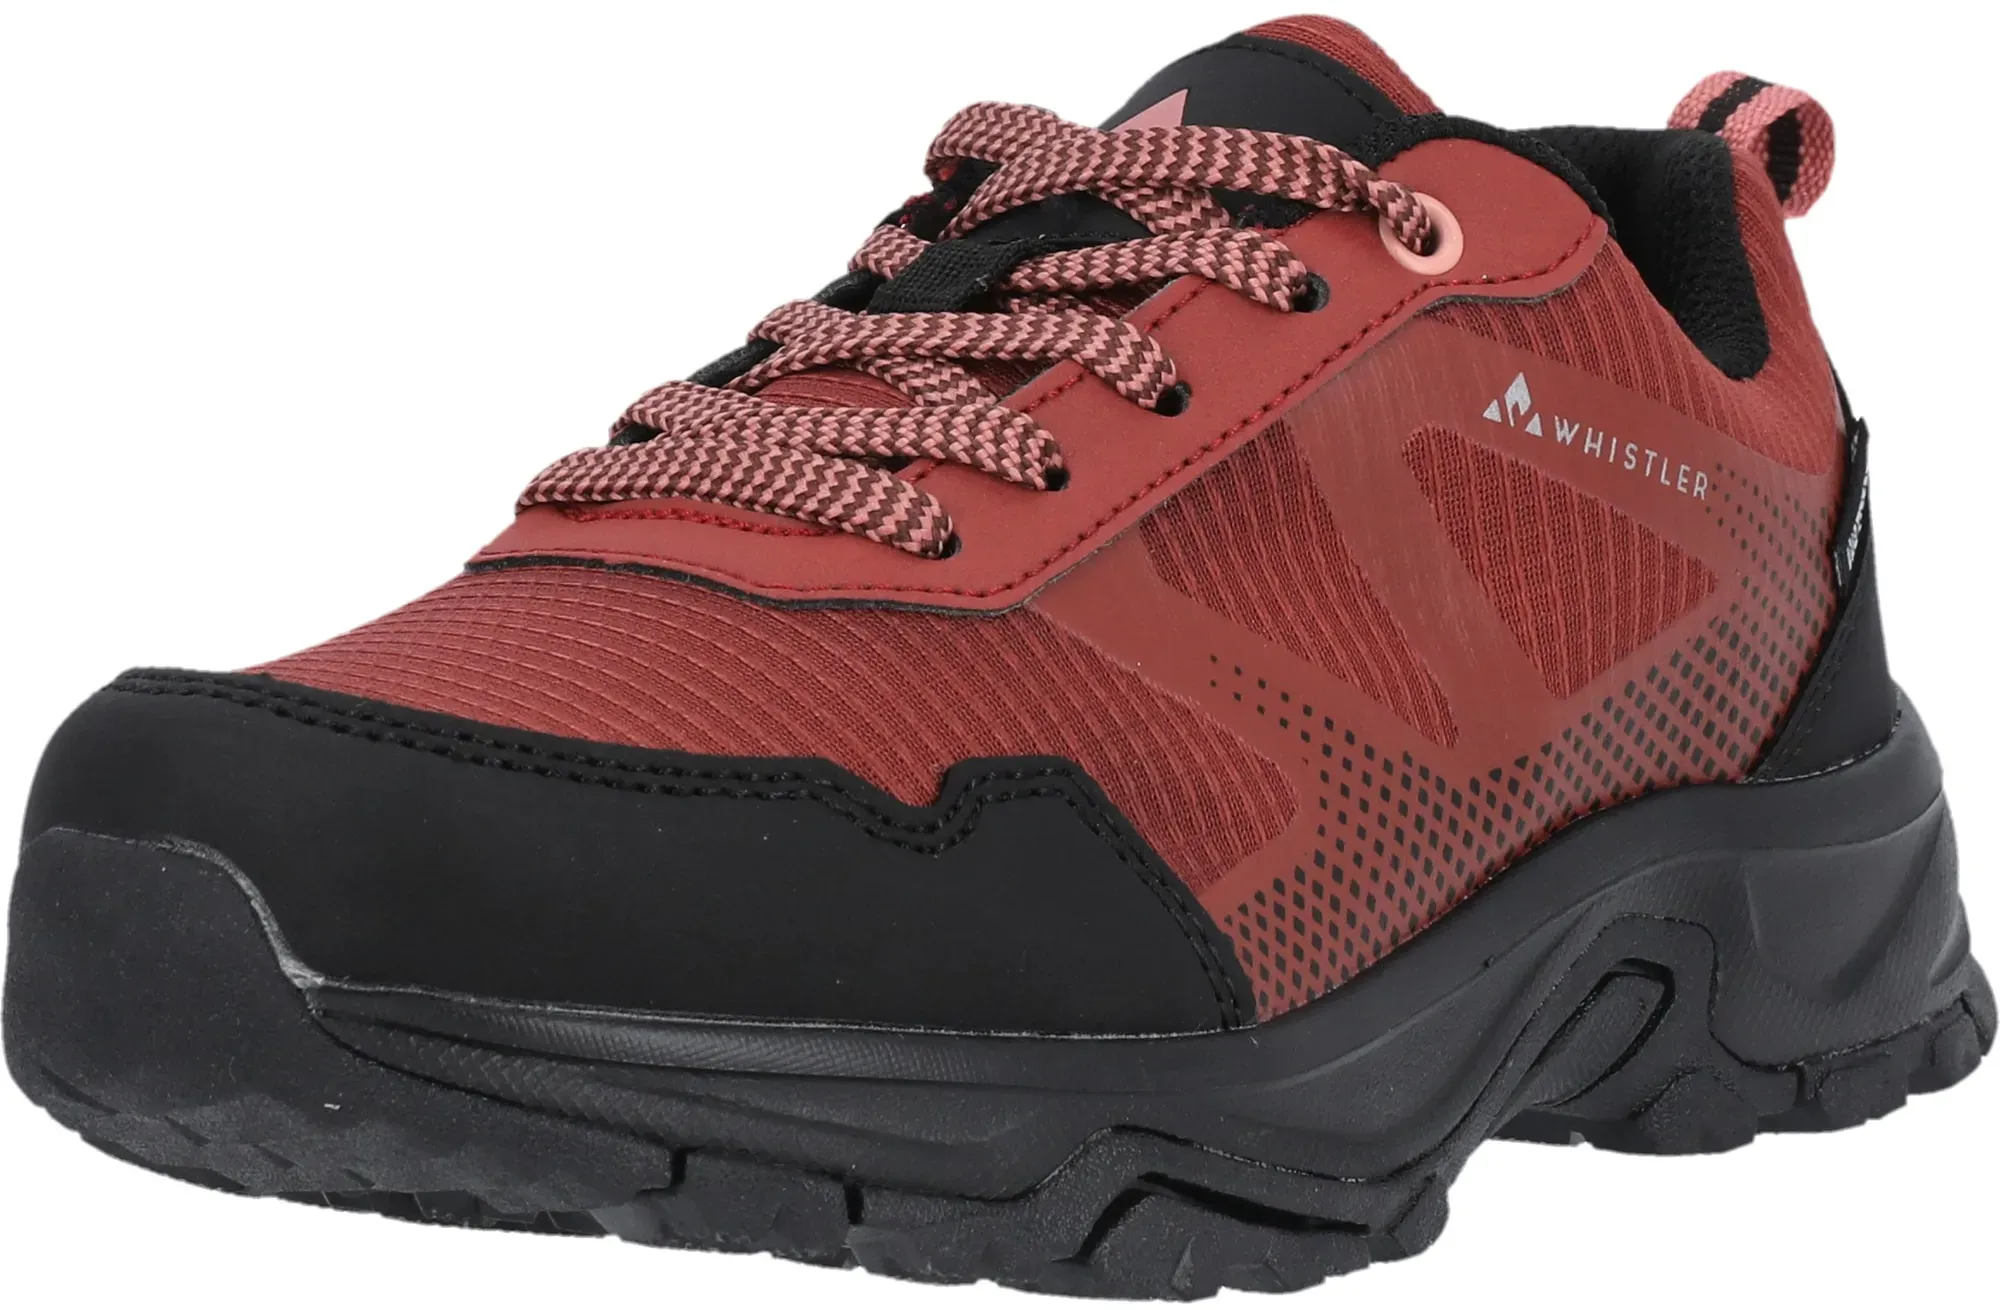 Trainingsschuh WHISTLER "Famtin" Gr. 36, rot (rot, schwarz) Schuhe Damen mit wasserdichter Funktion